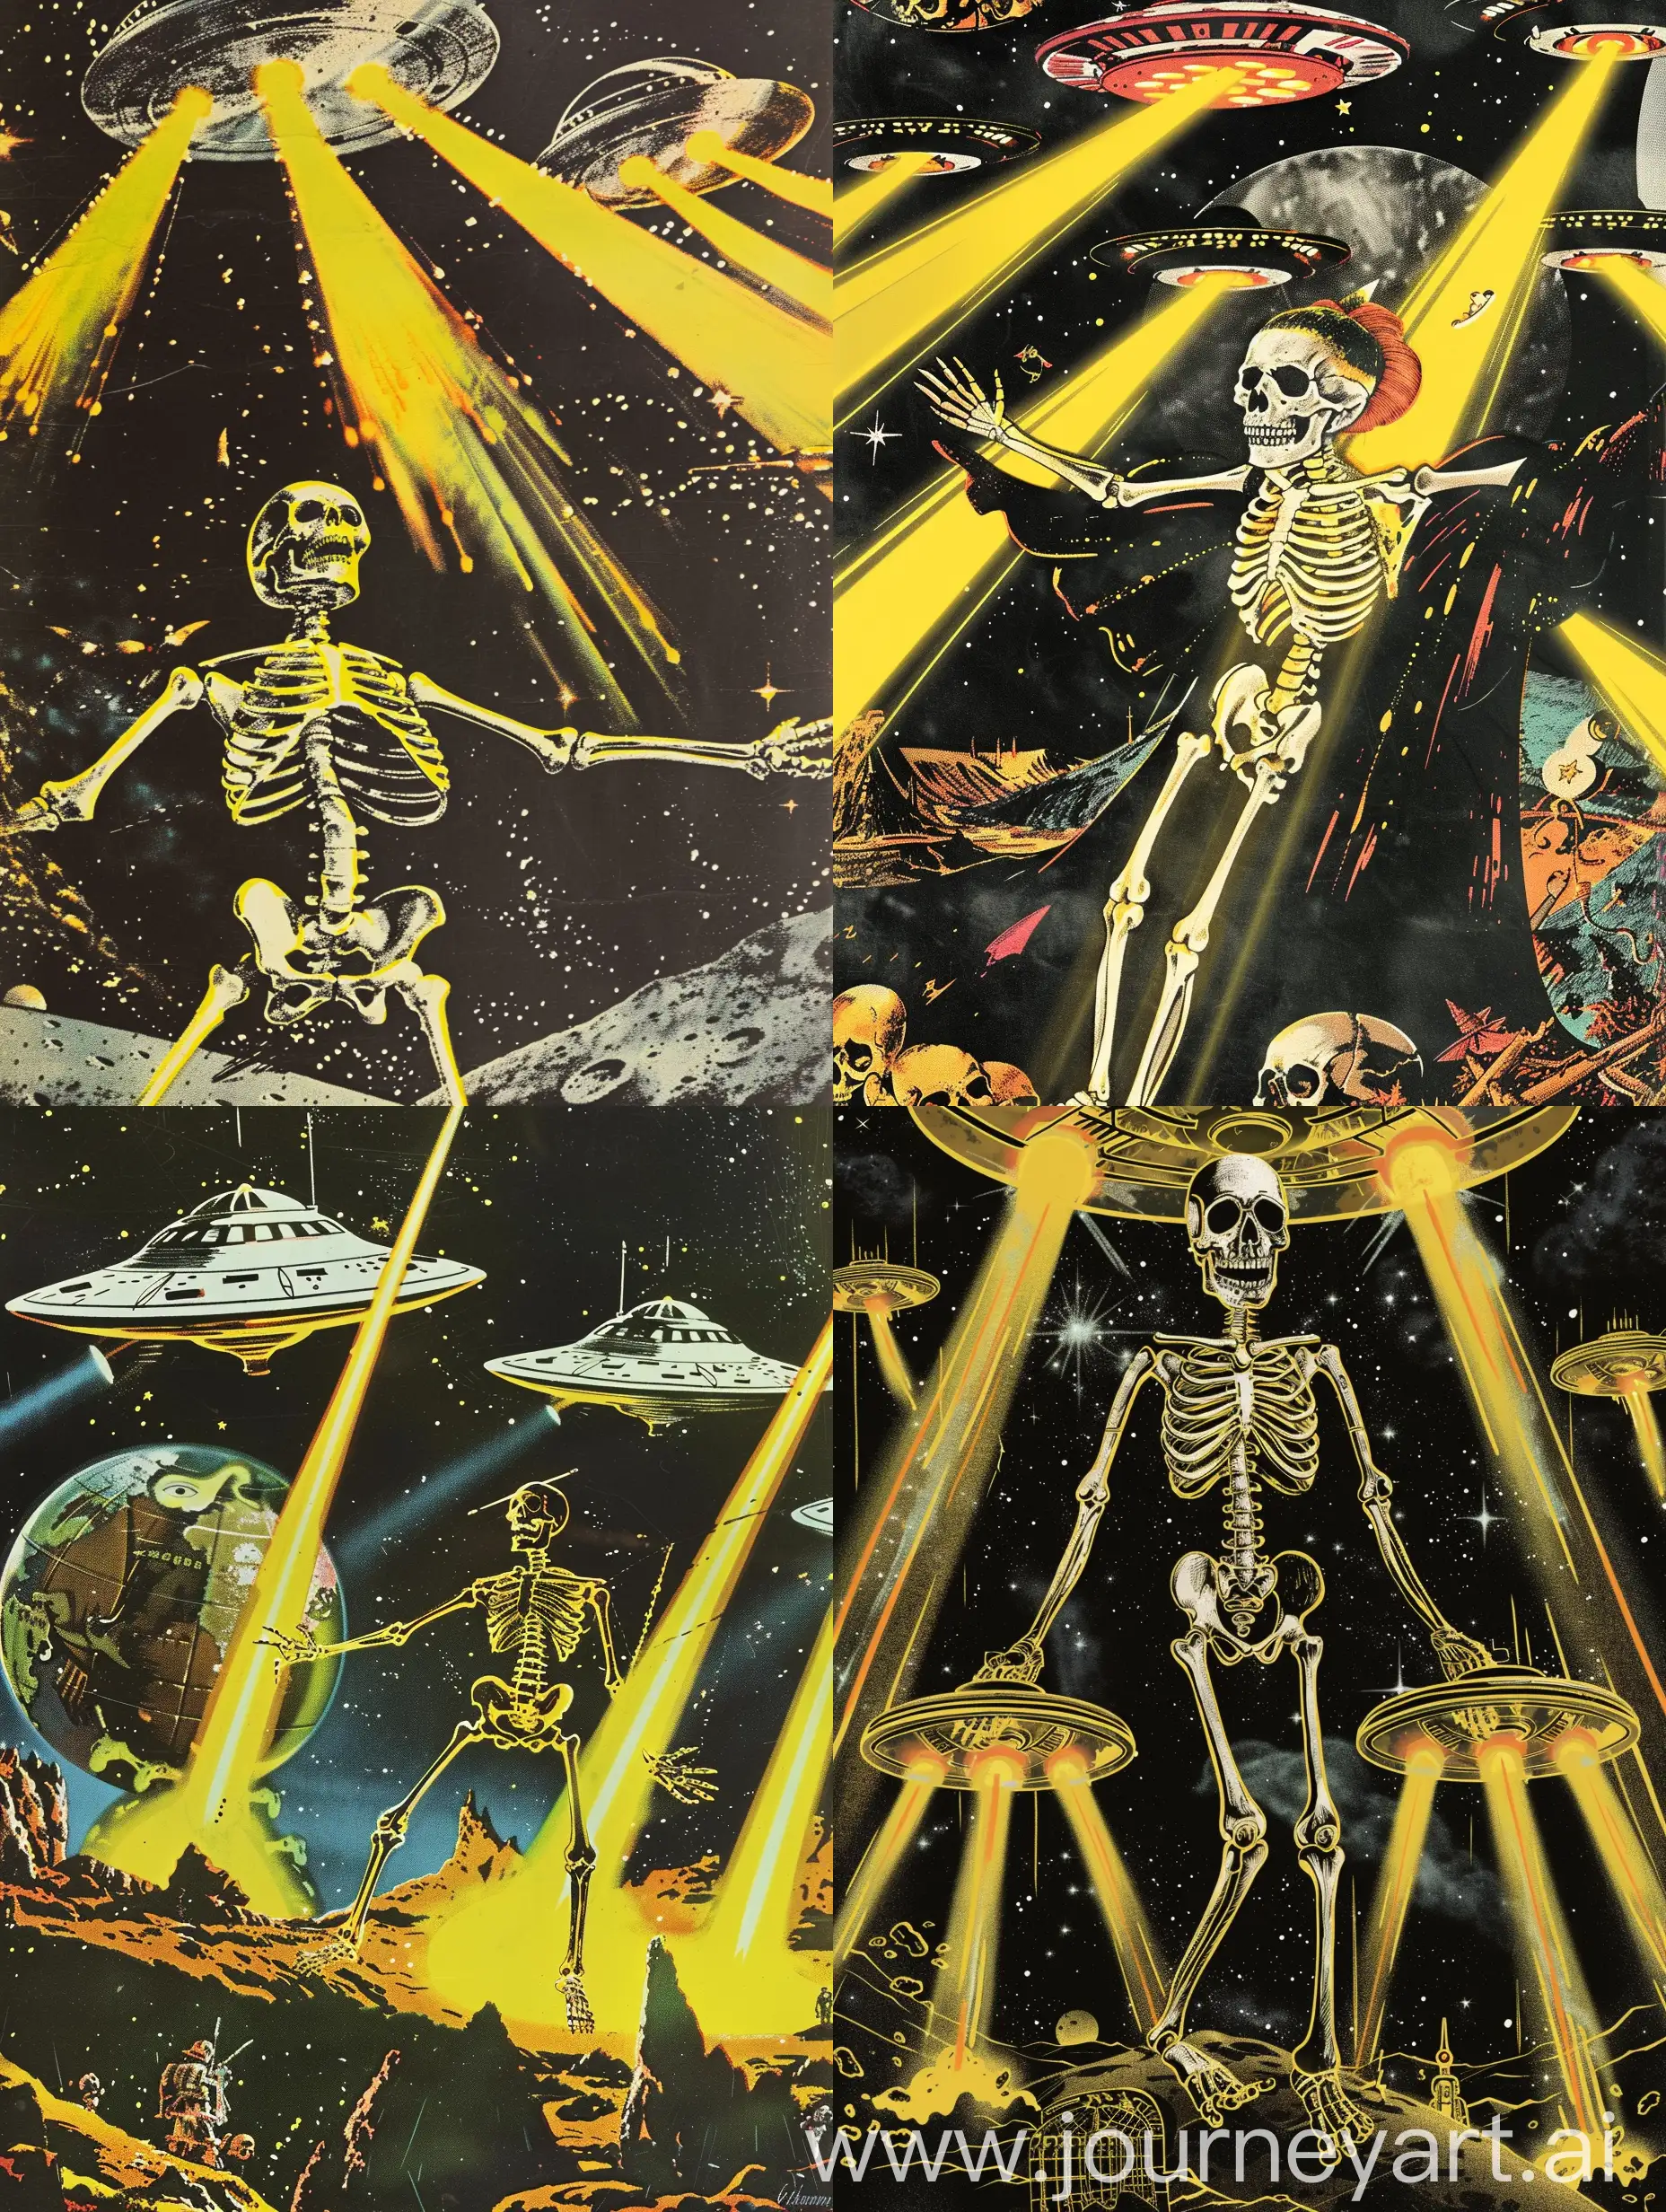 BMovie-Transformation-Skeleton-to-Vampira-with-UFOs-in-Space